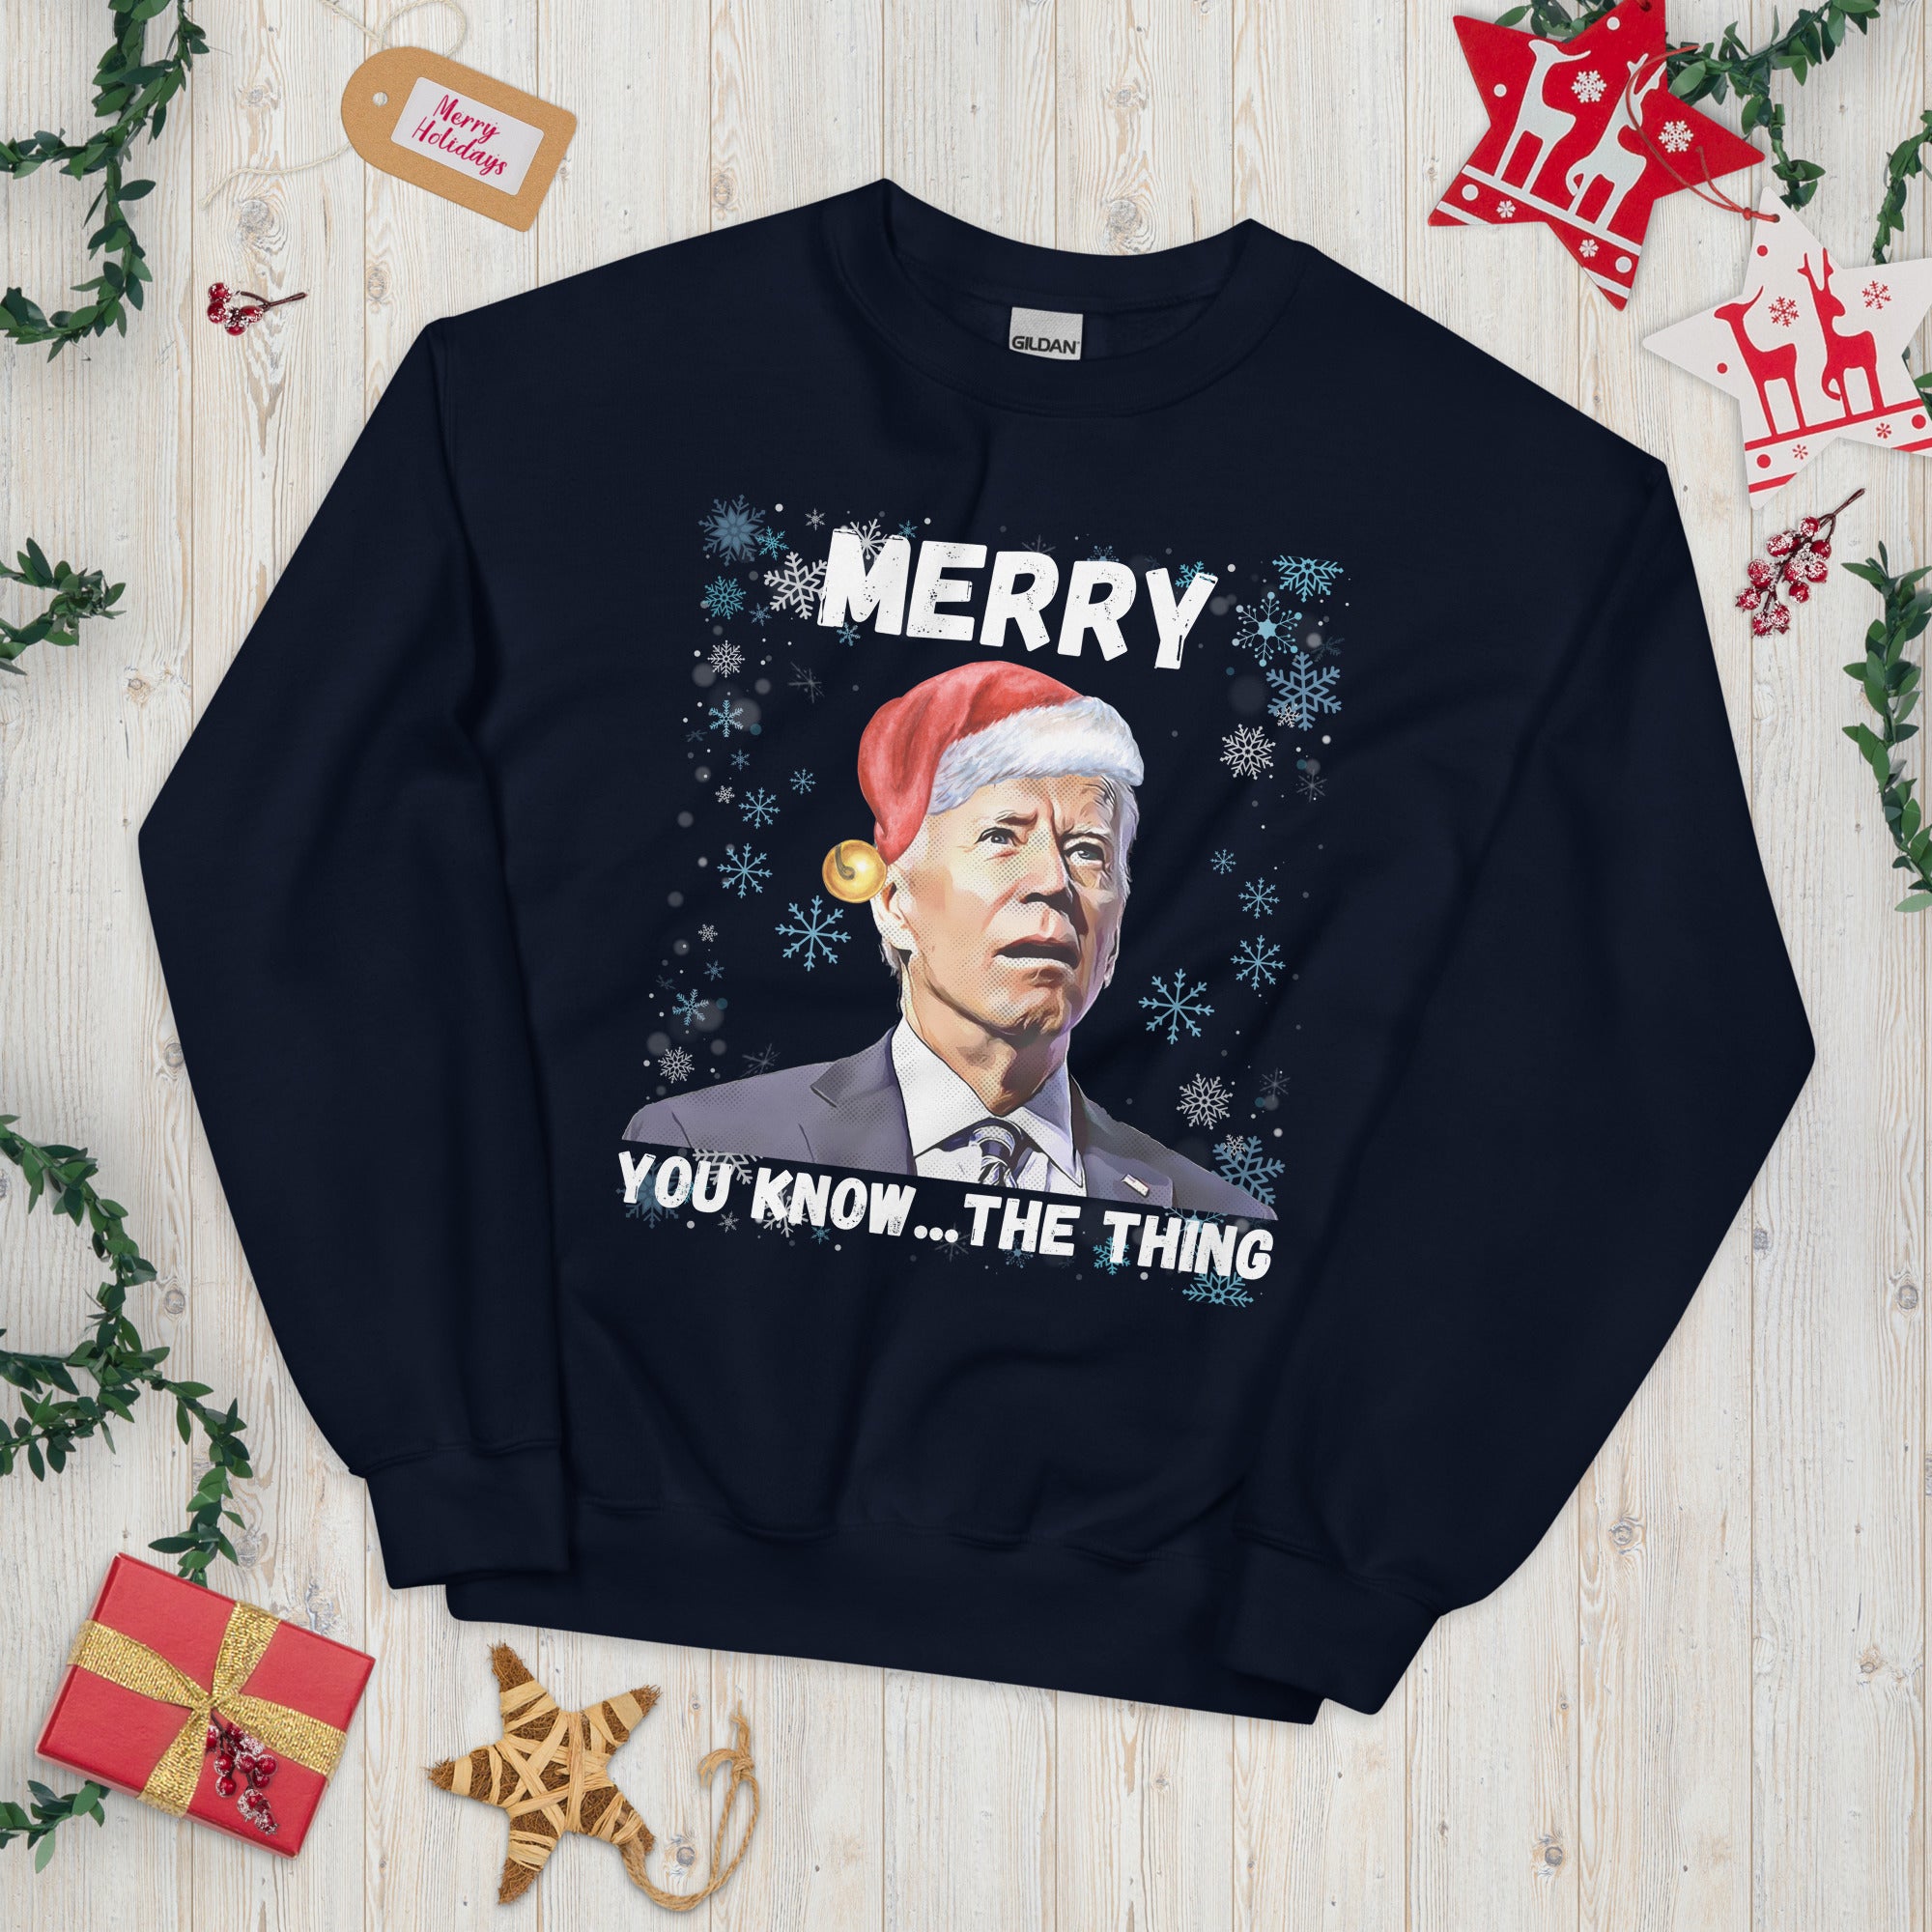 Merry You Know The Thing, Christmas Biden Sweatshirt, Funny Confused Biden Xmas Shirt, Santa Joe Biden Sweater Republican Gift, FJB Crewneck